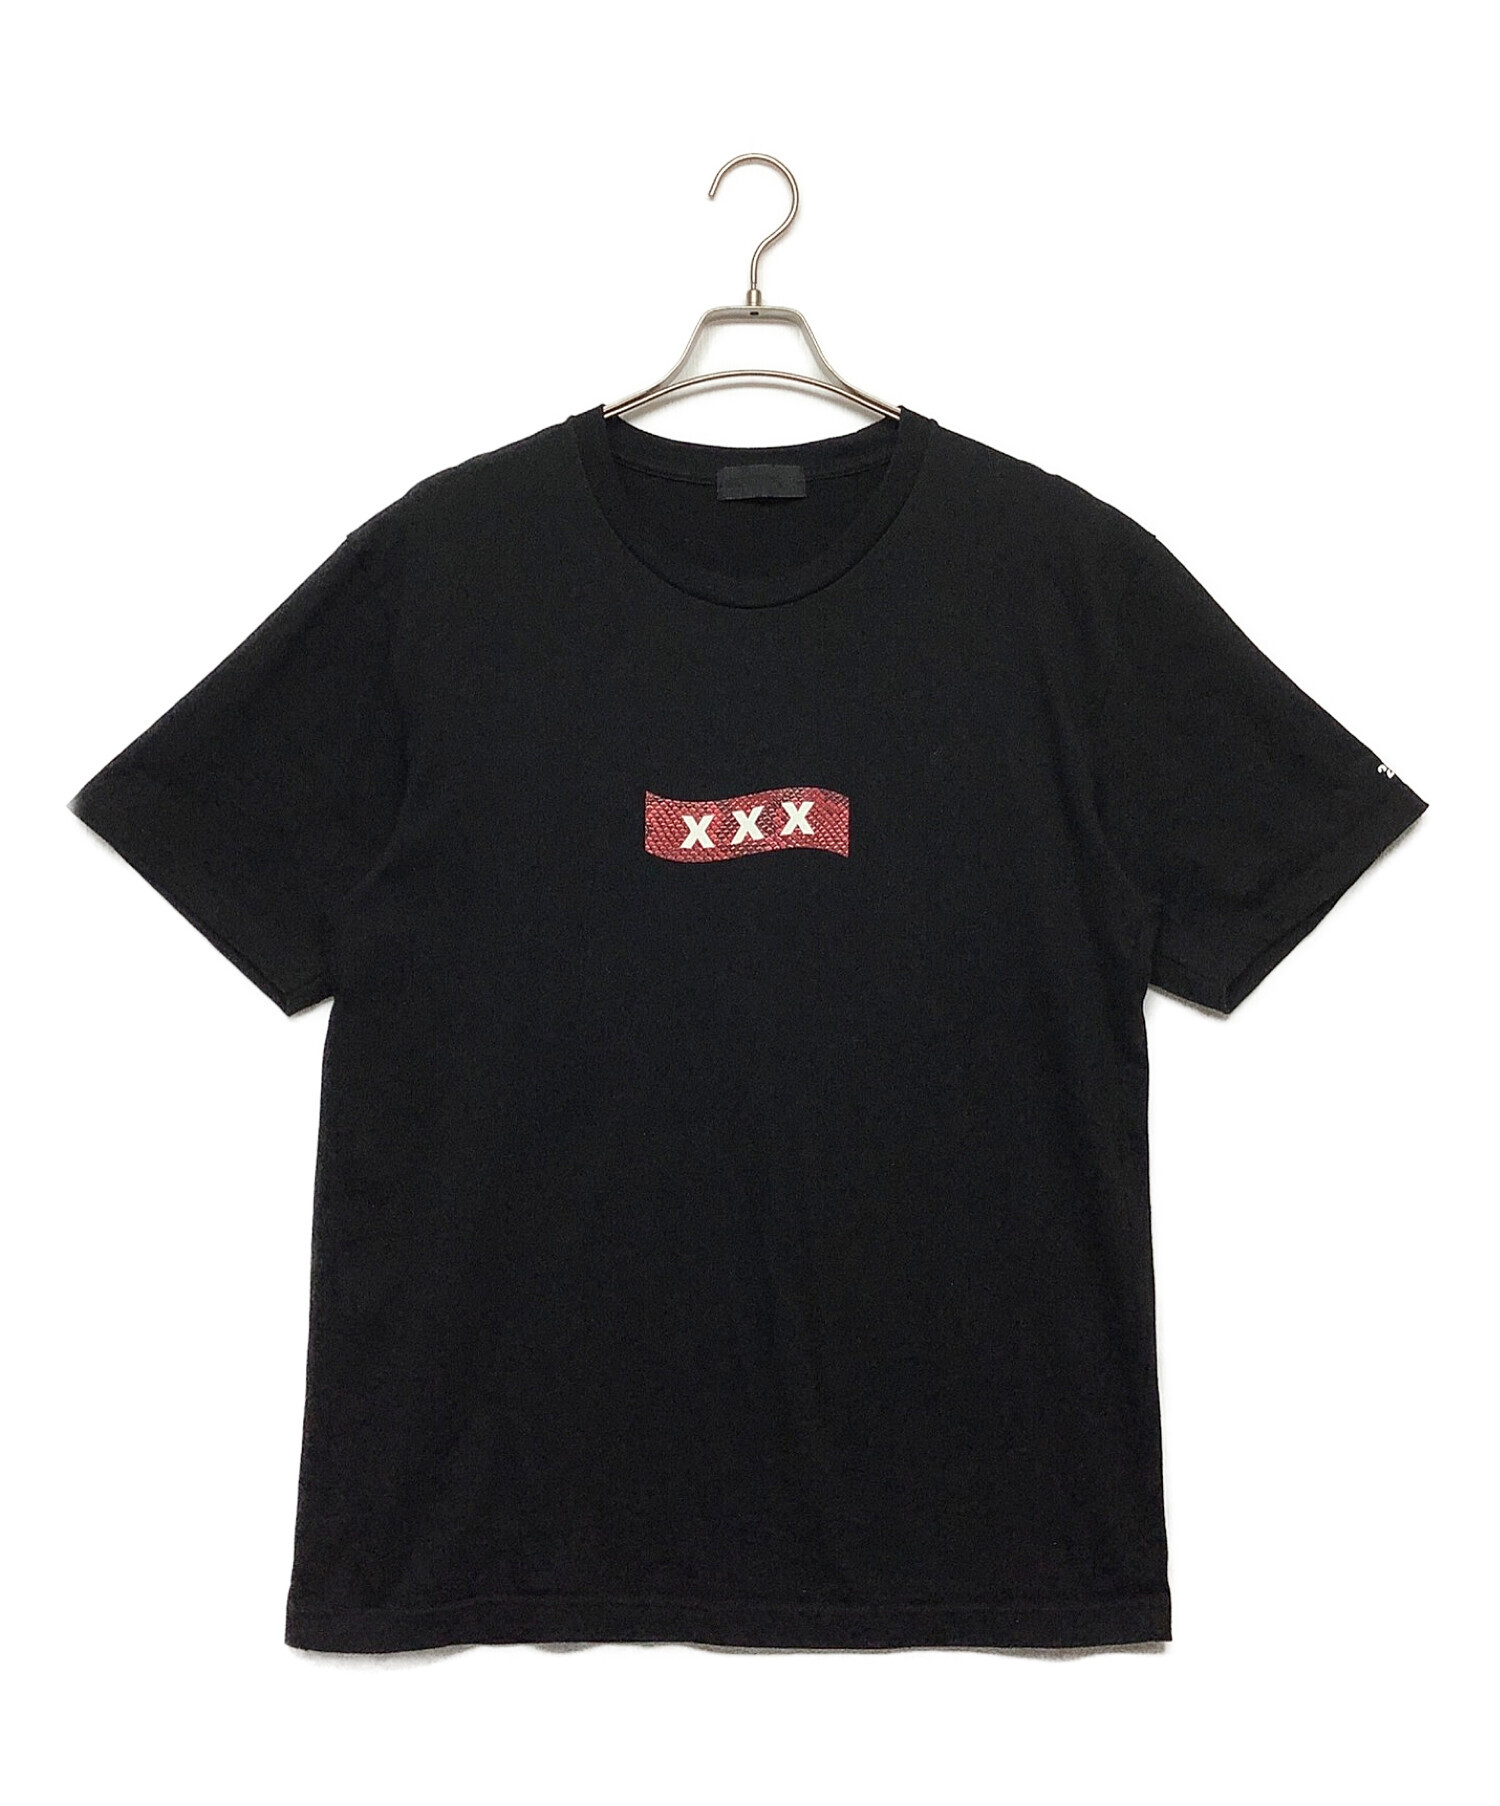 GOD SELECTION XXX Tシャツ 半袖 ブラック XL-eastgate.mk